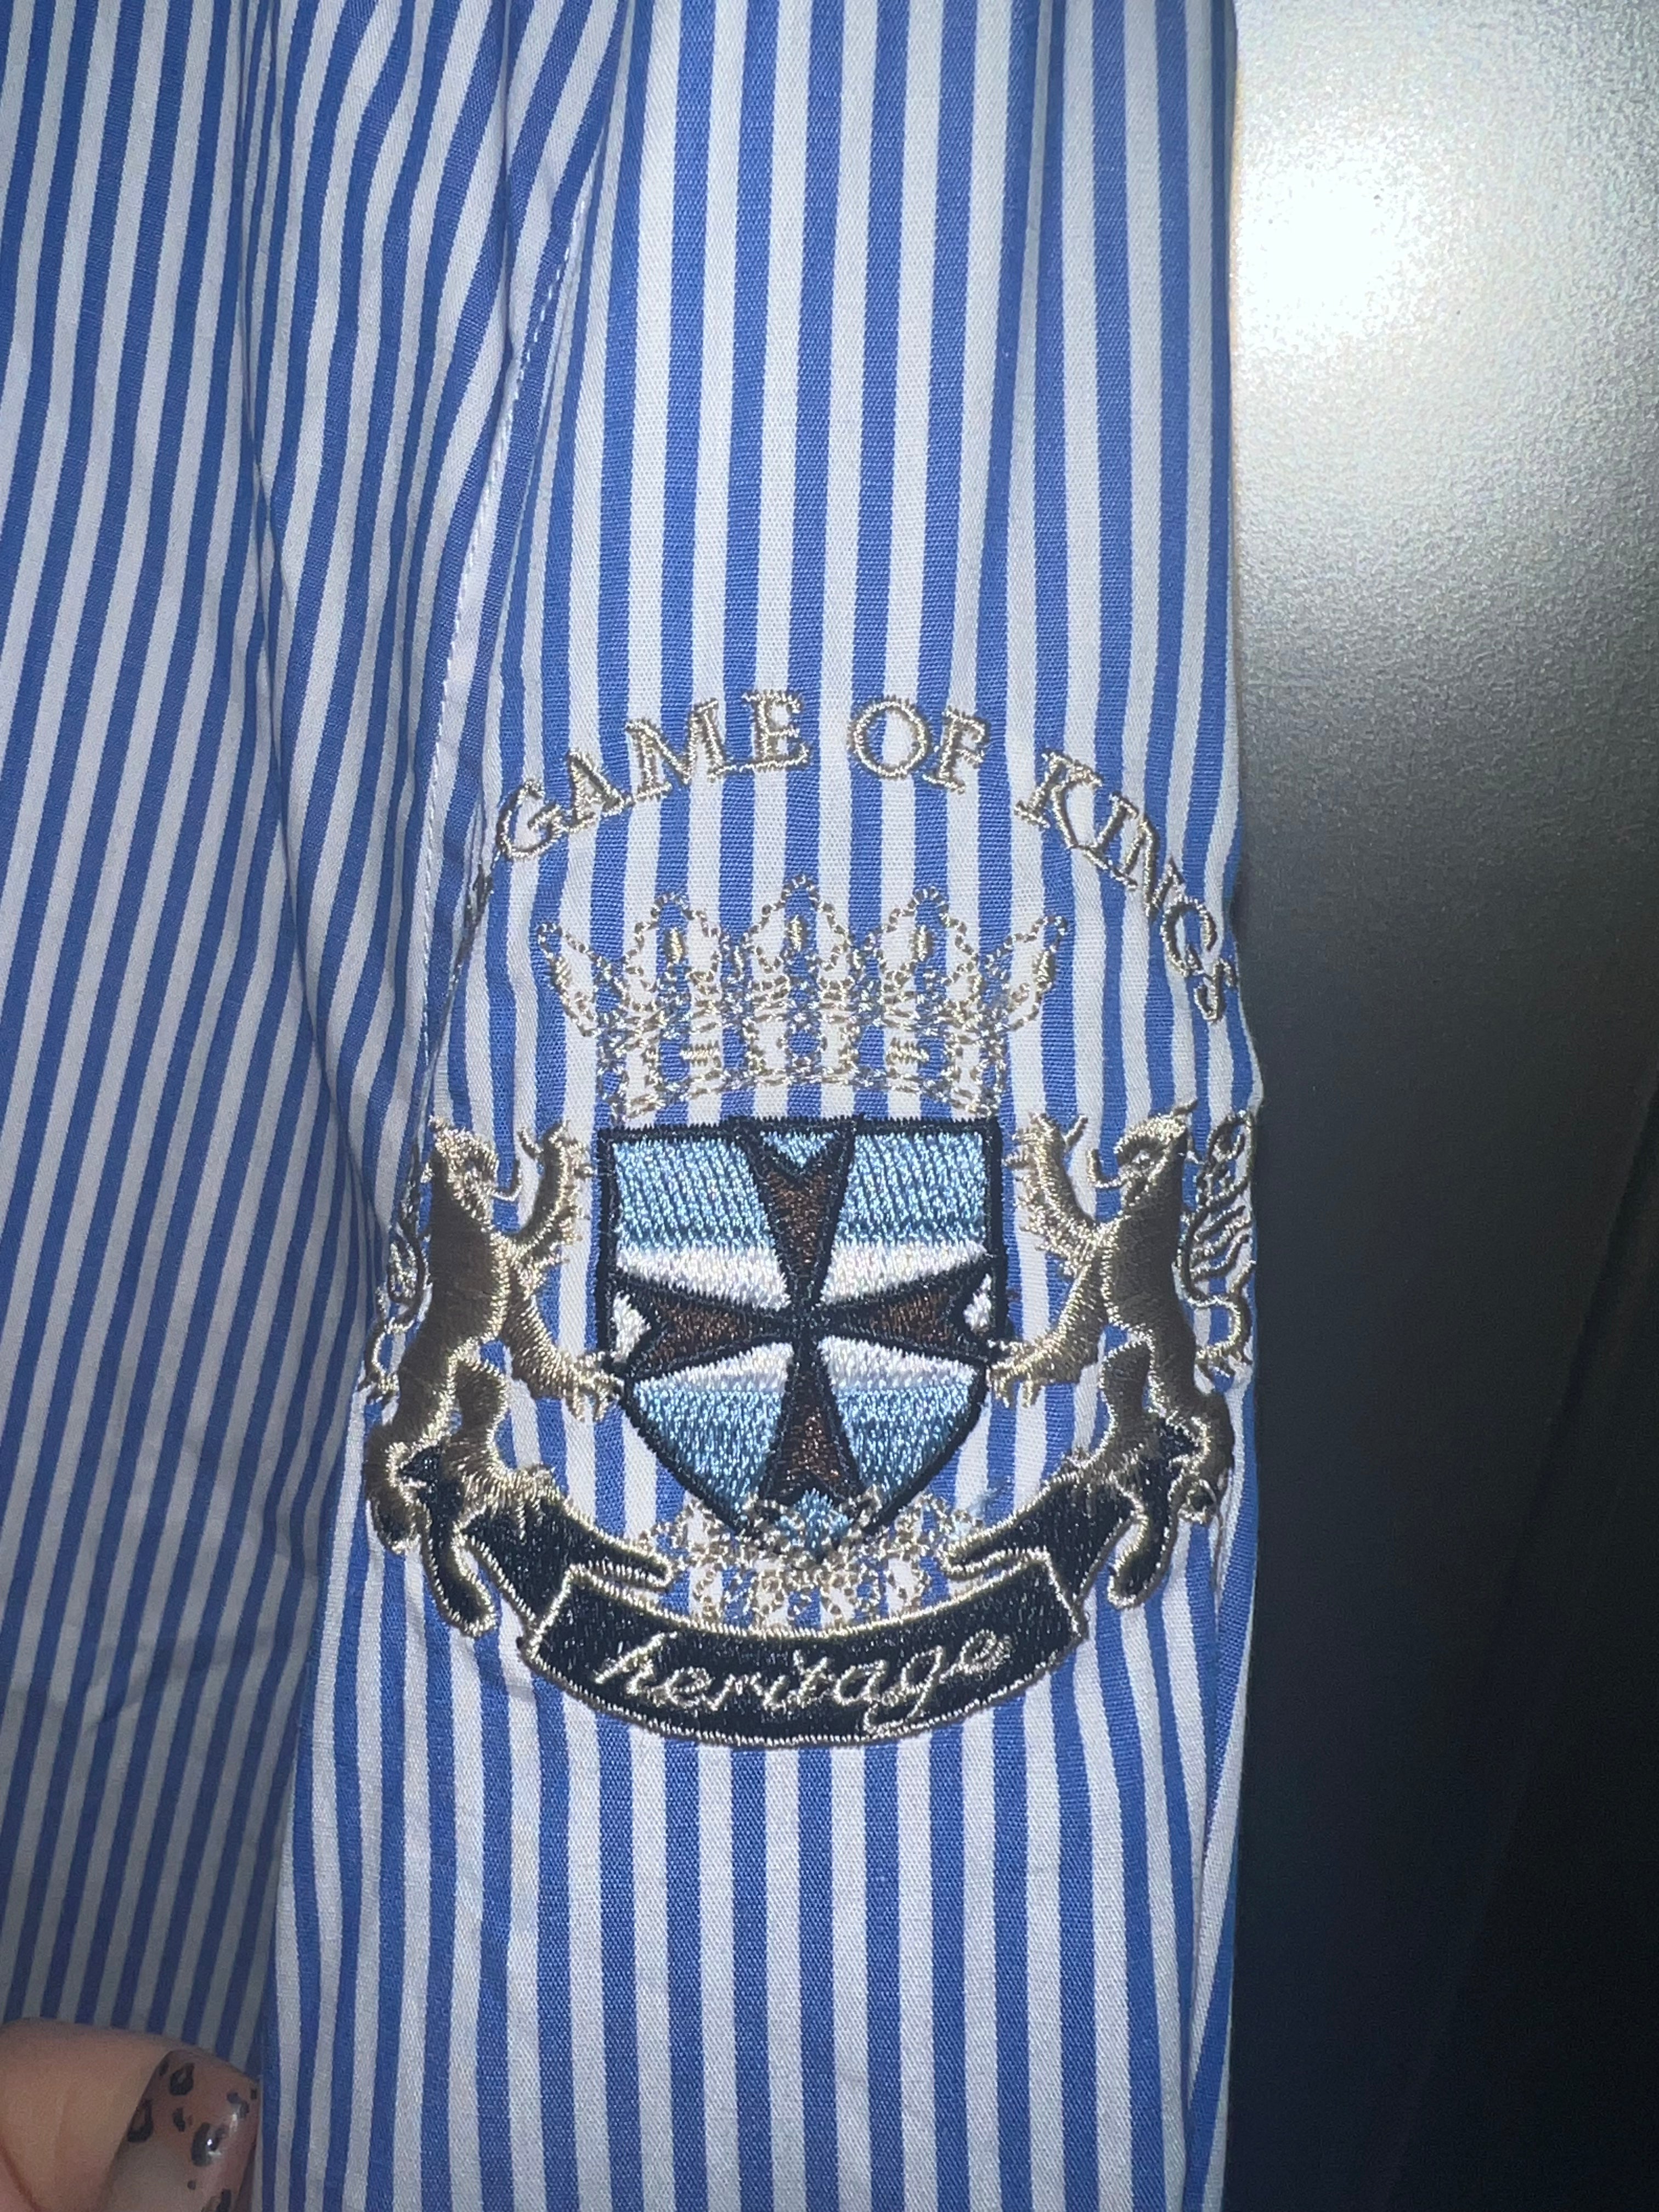 Hv Polo Ultramarine Pinstripe Men’s Large Shirt Rrp £109